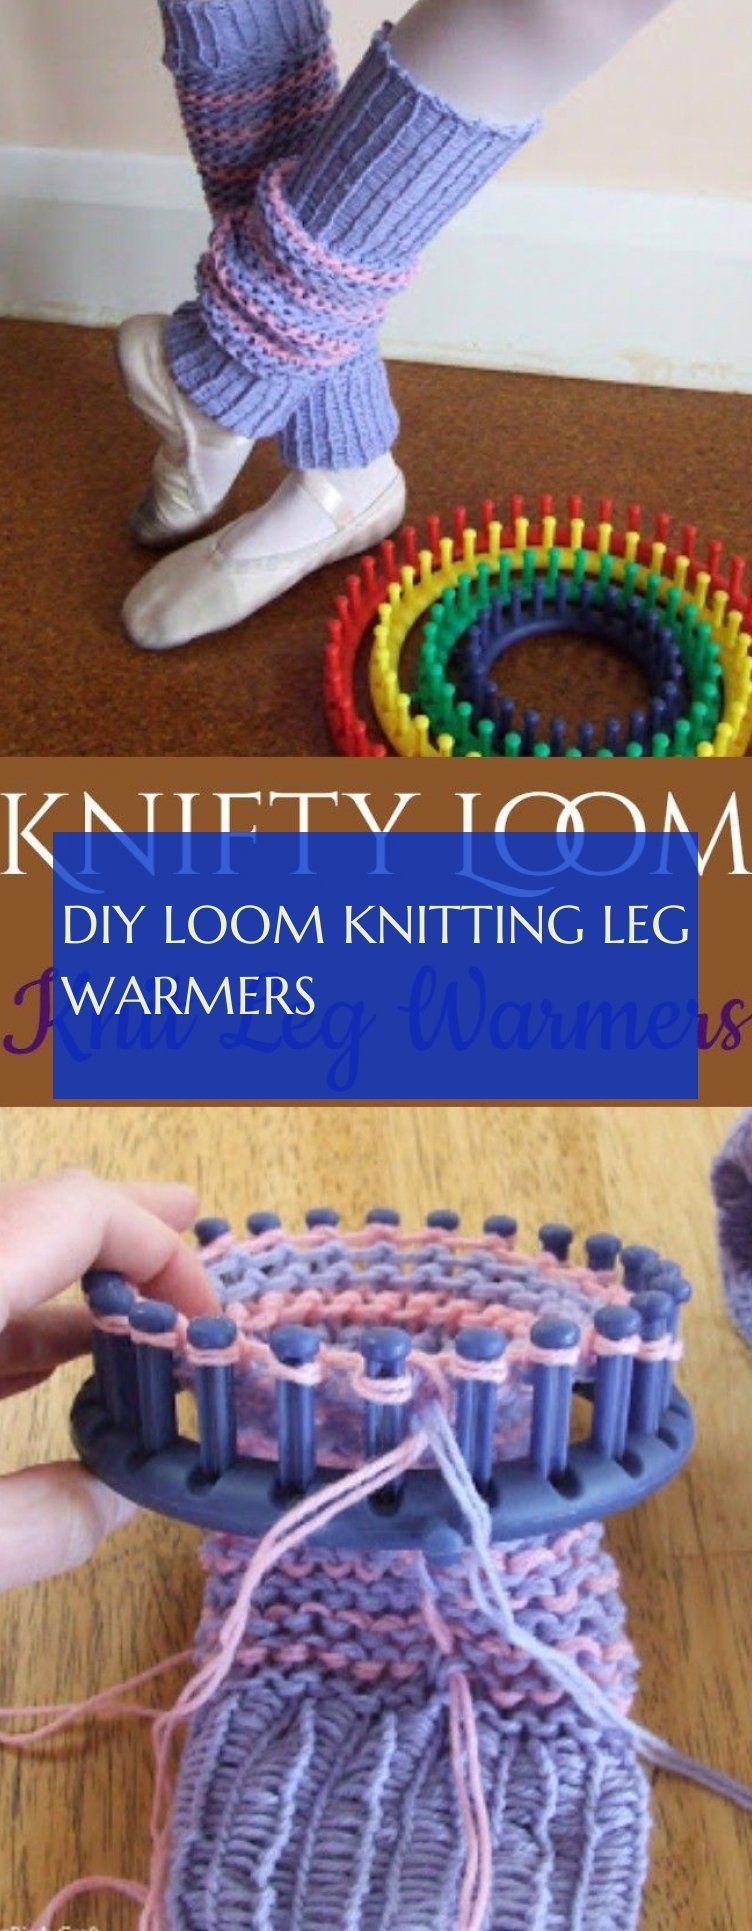 diy loom knitting leg warmers & diy webstuhl stricken beinlinge & #loom #knittin…